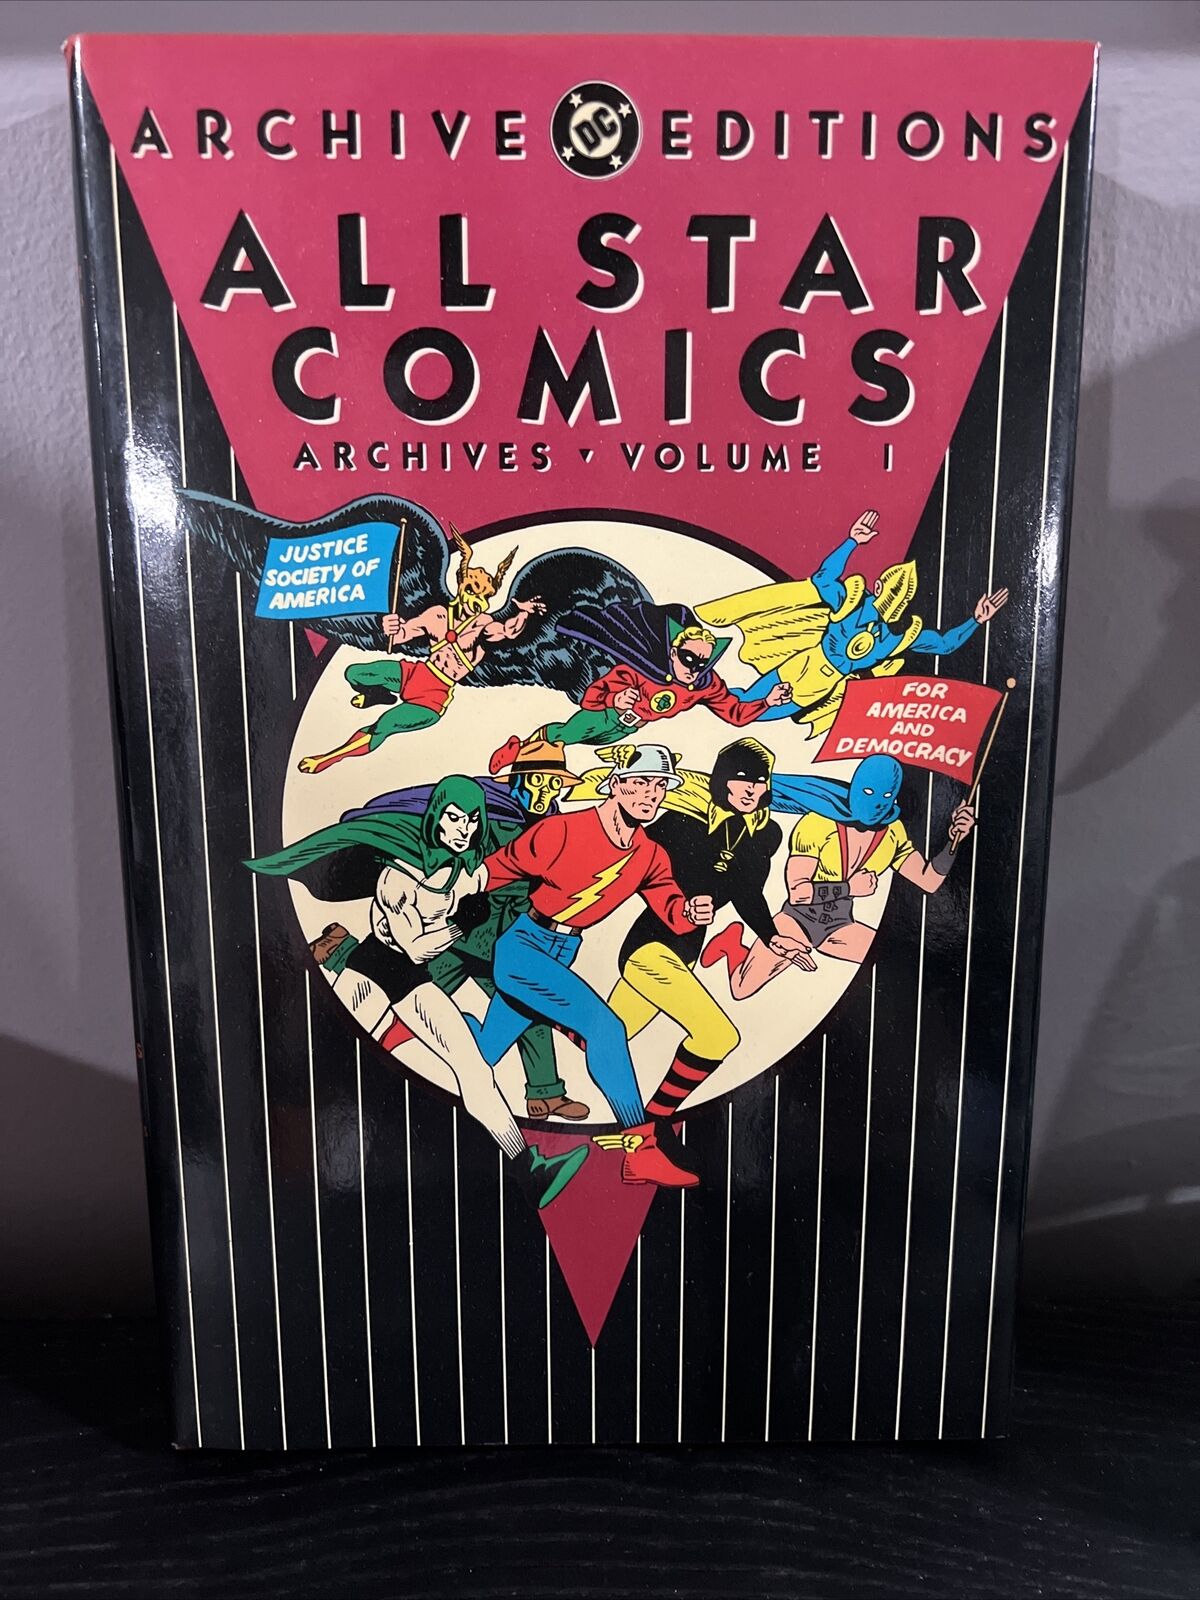 All Star Comics Archives Vol 1 (DC, 1991). Excellent condition